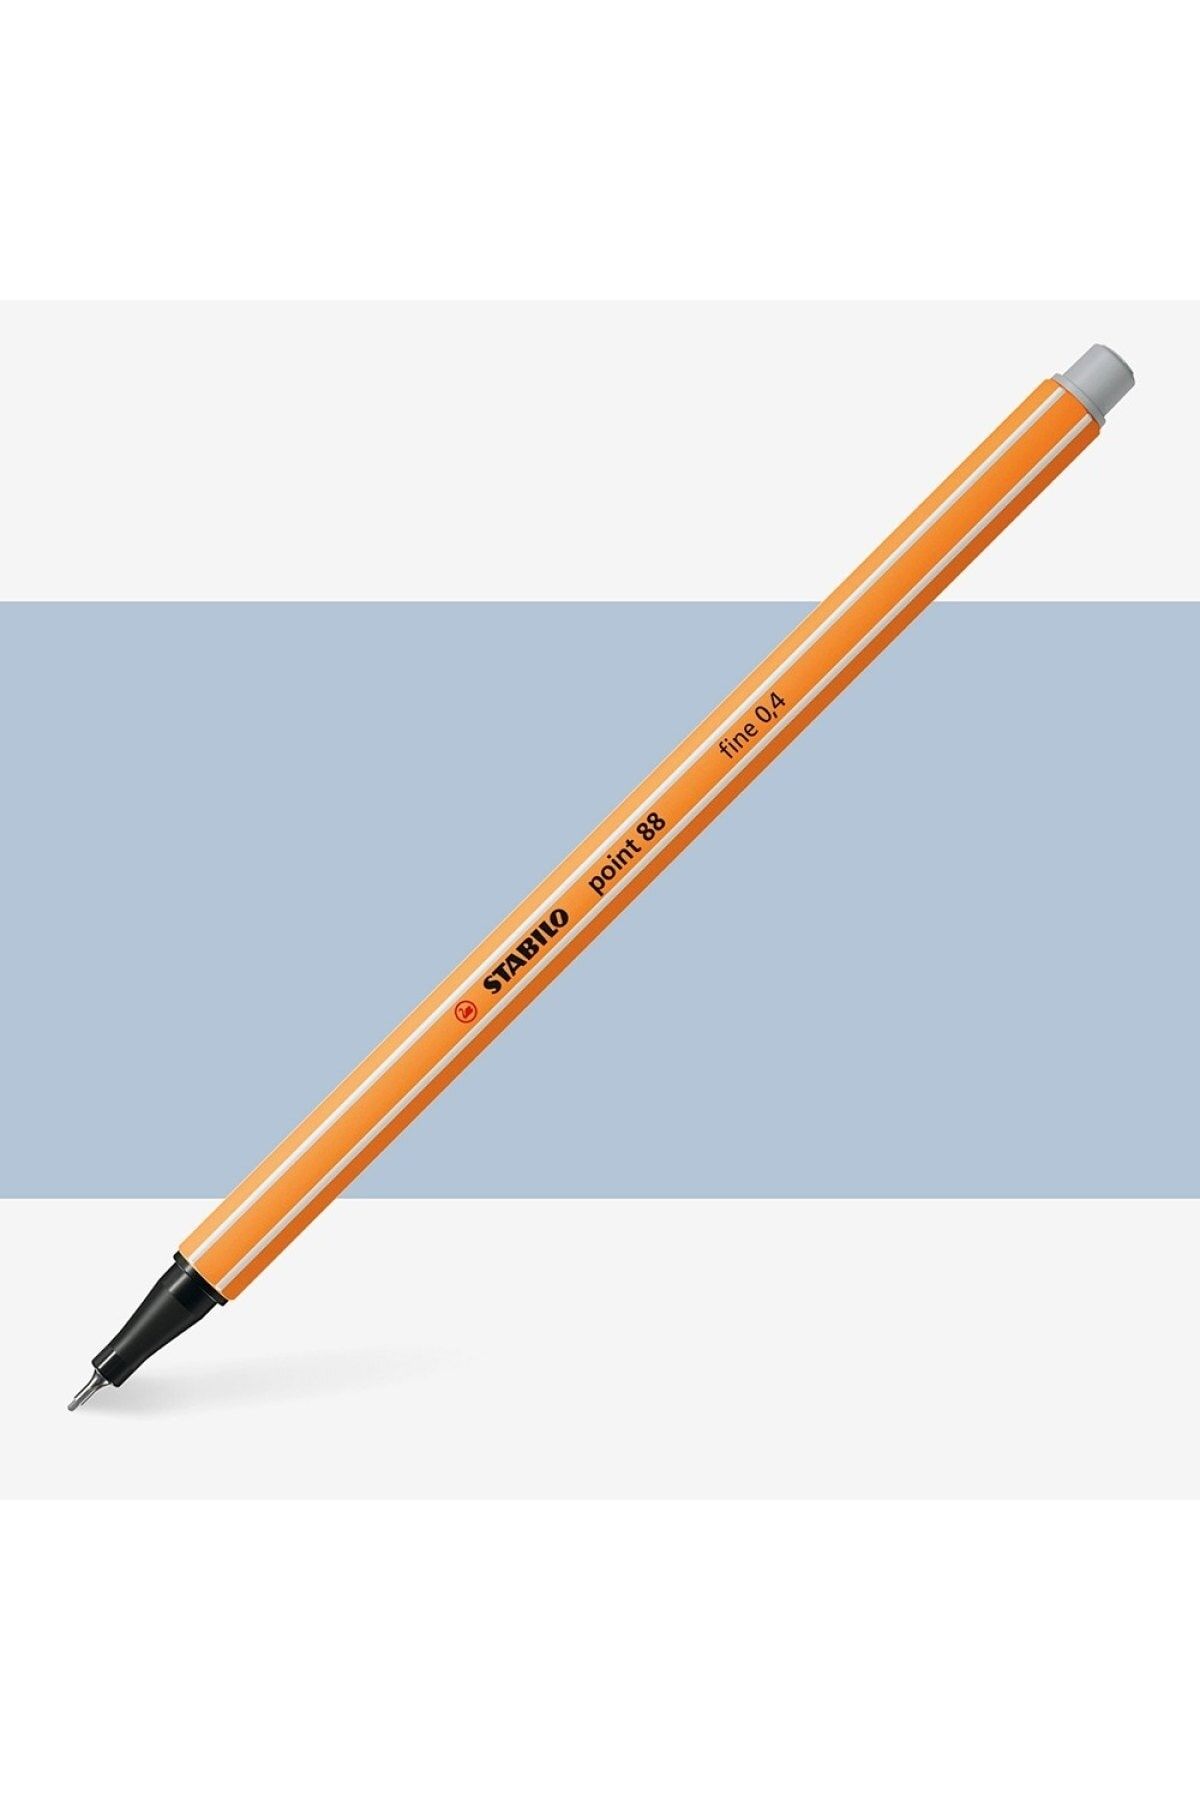 Stabilo Point 88 Fineliner Pen 0.4mm Ince Keçe Uçlu Kalem Açık Gri